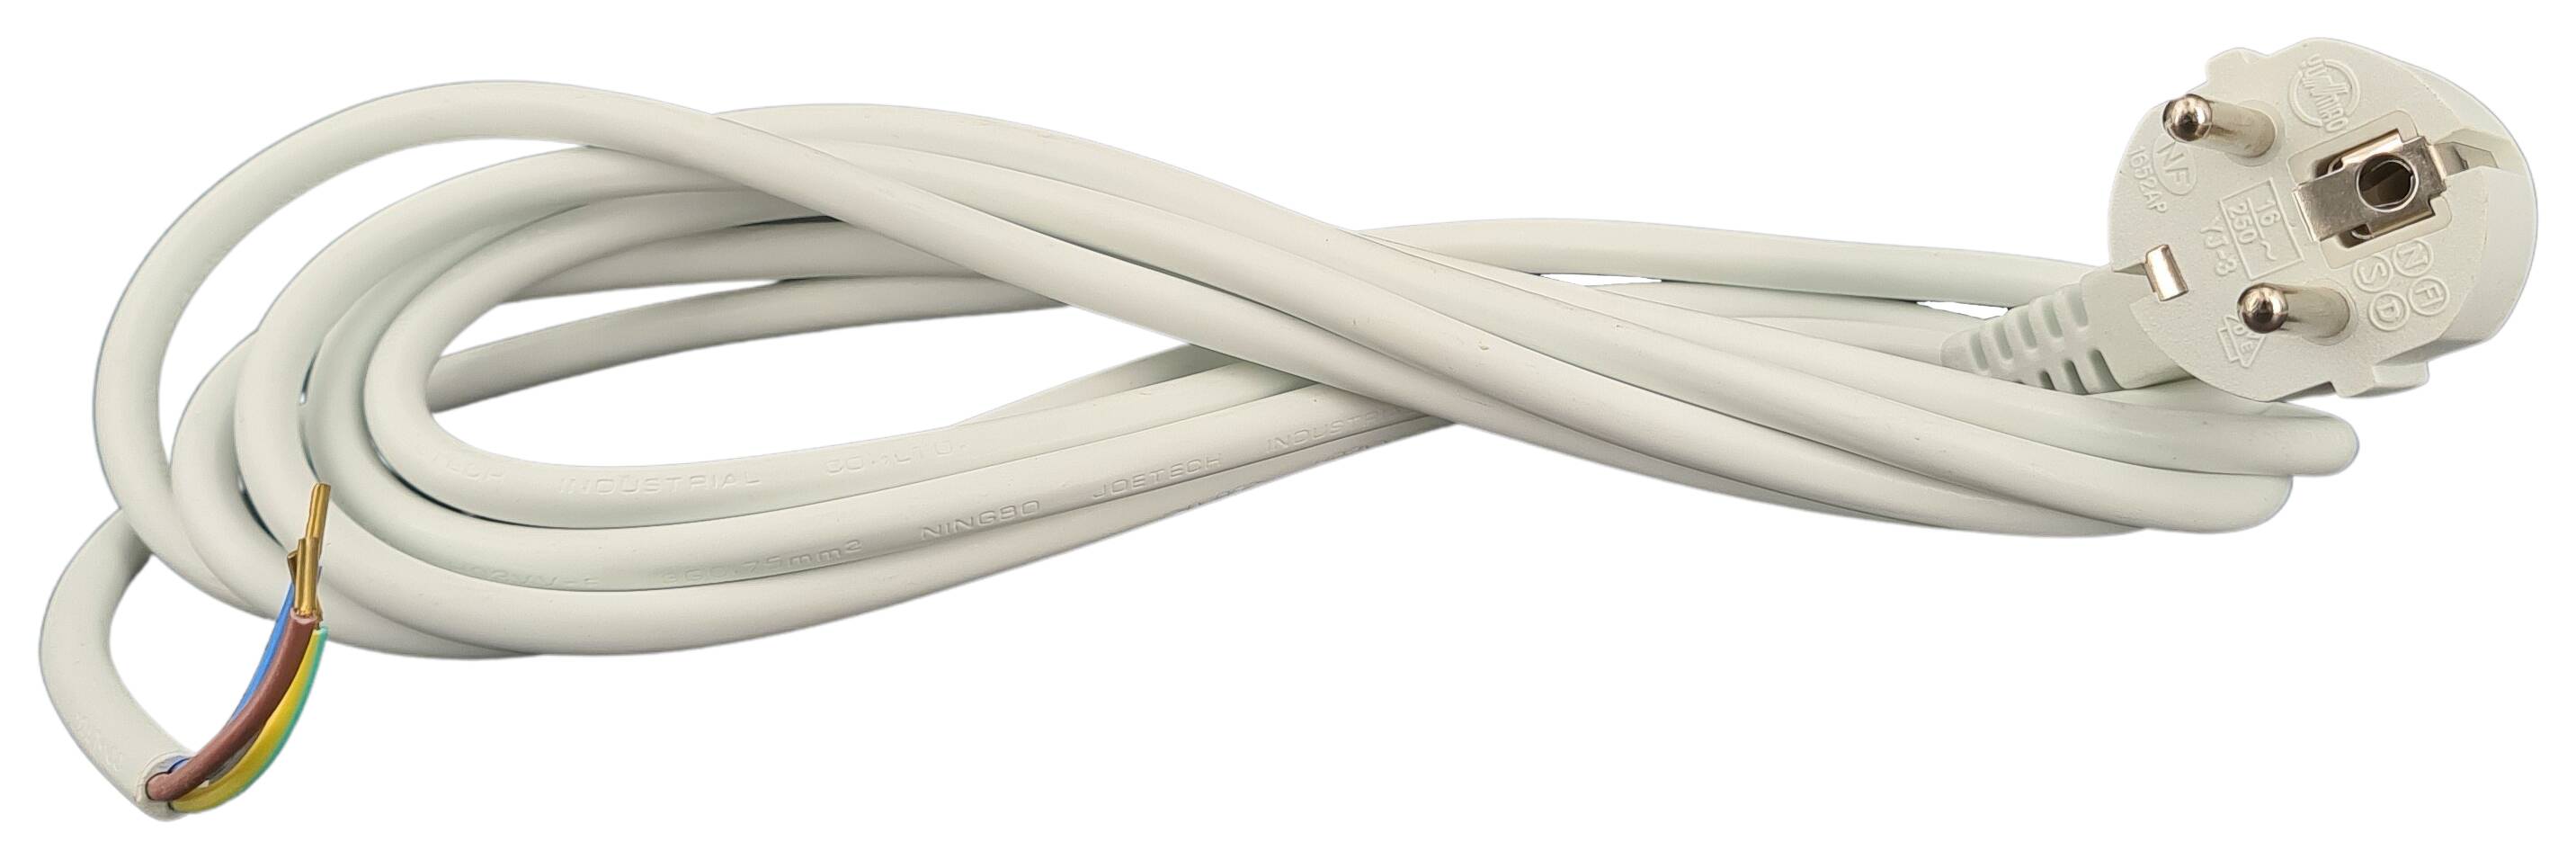 cord-set 3G 0,75/2500 with schuko angled plug white